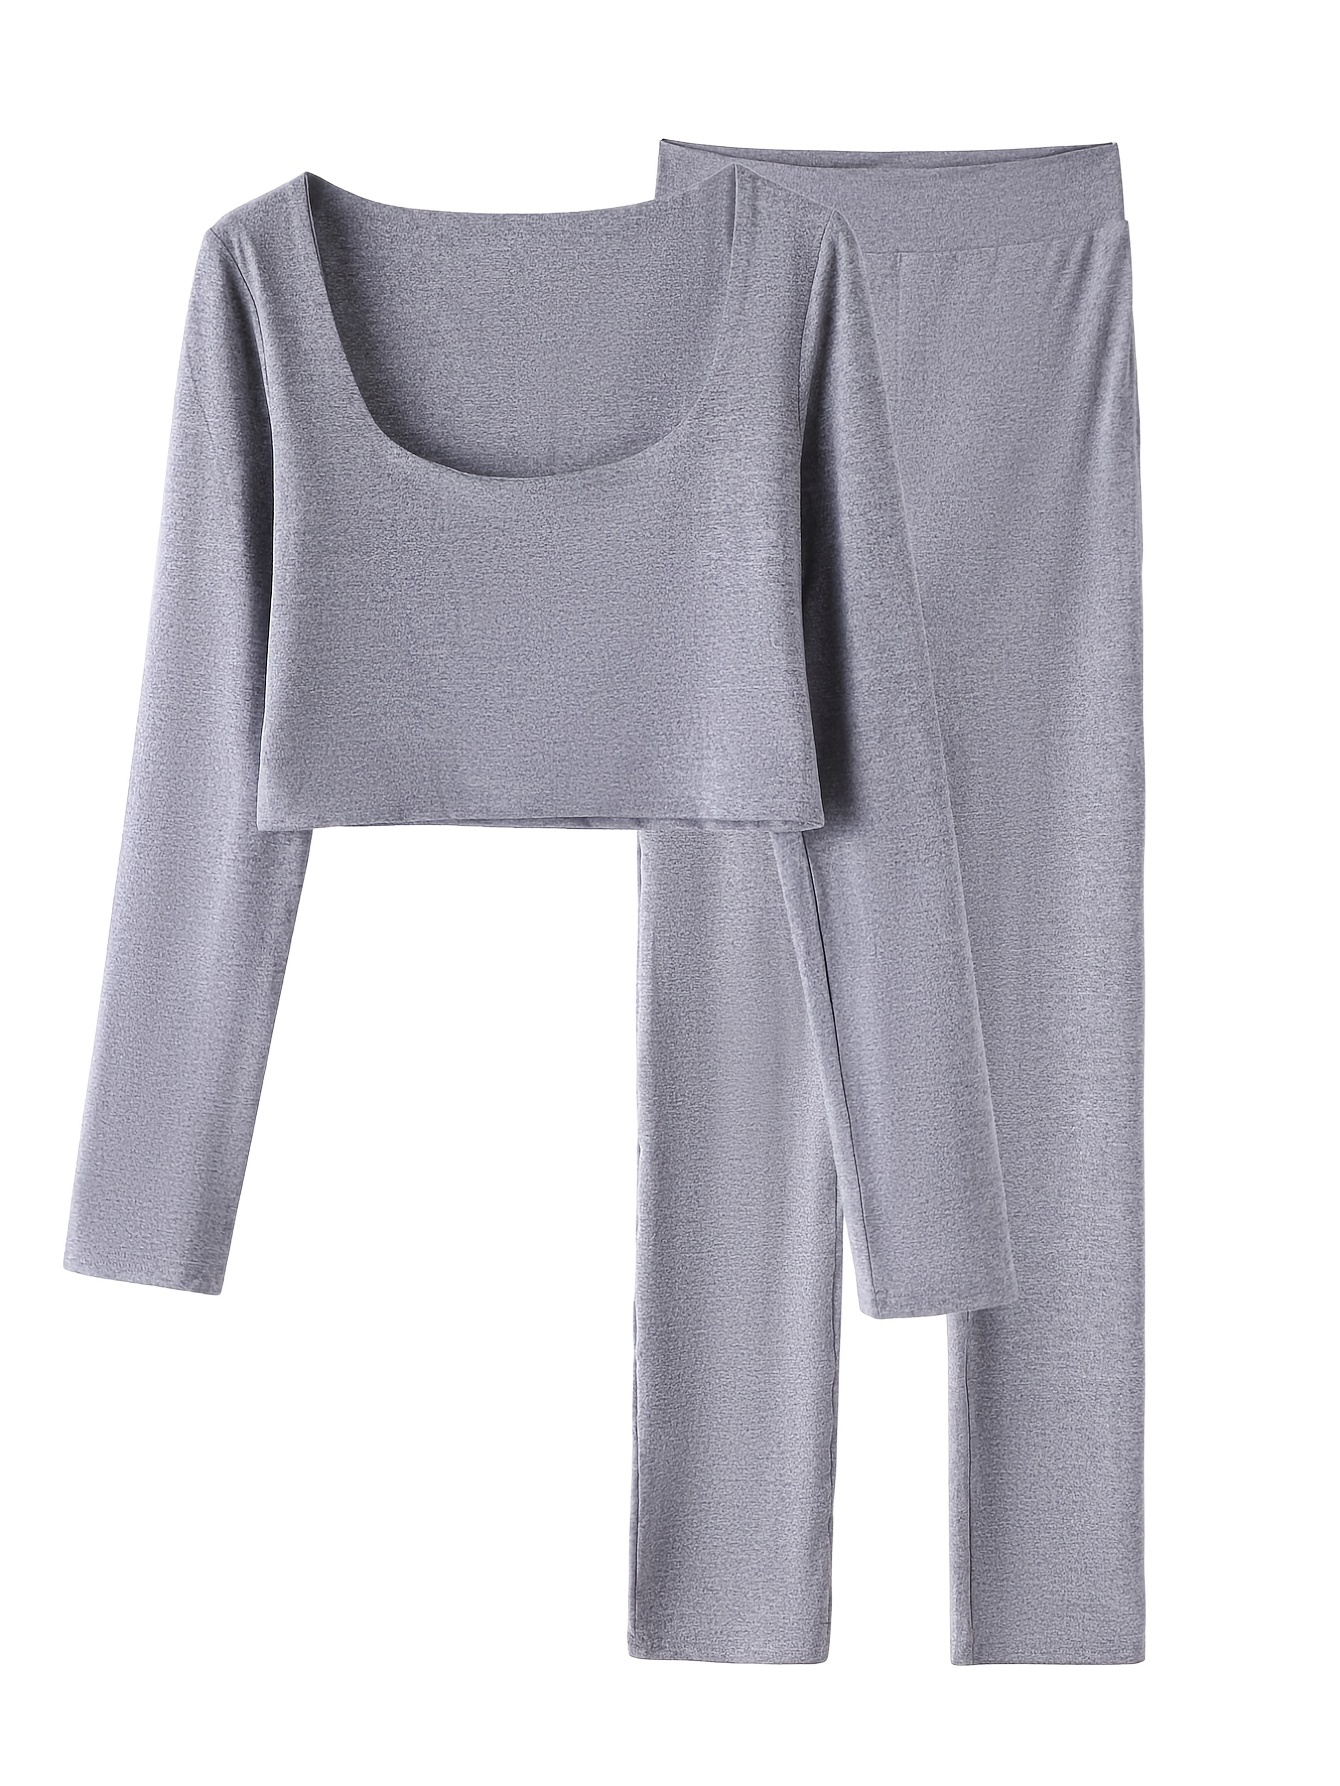 Womens Casual 2 PC SET Long Sleeve Crop Top Sweater Shirt Leggings